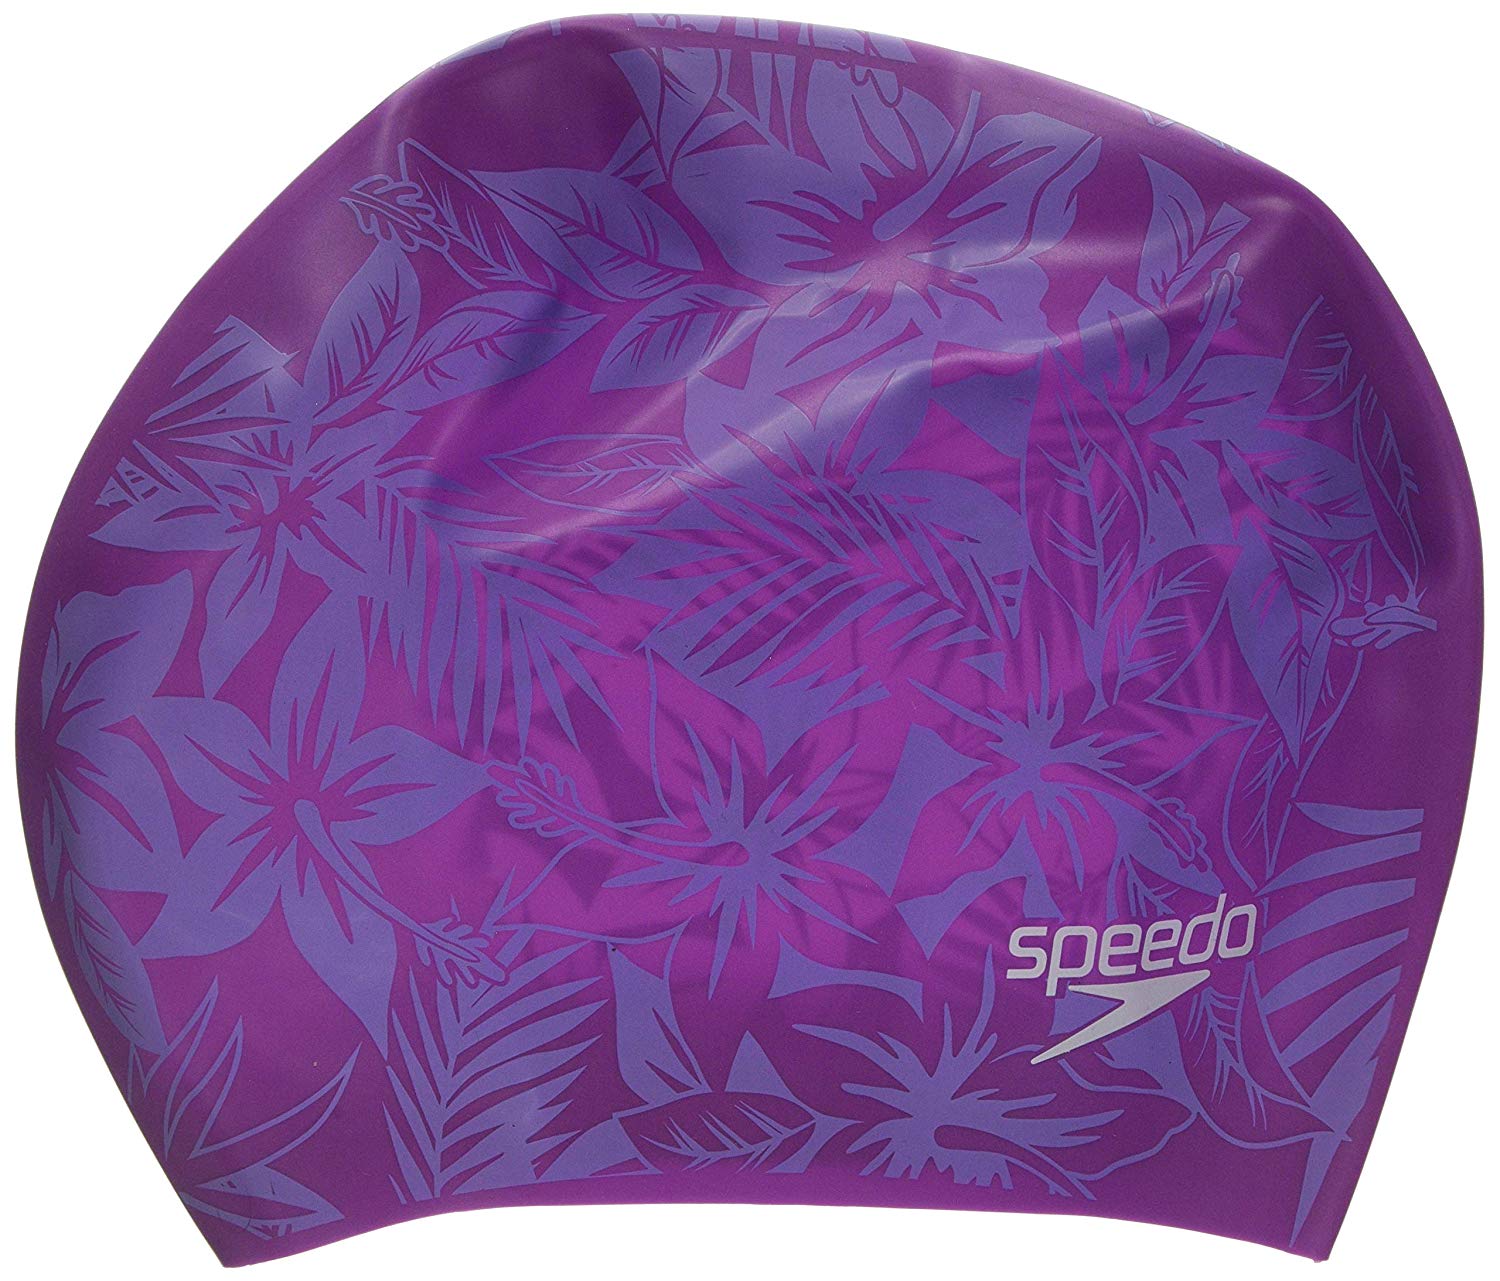 Speedo Long Hair Printed Cap (Pink/Purple) - Best Price online Prokicksports.com